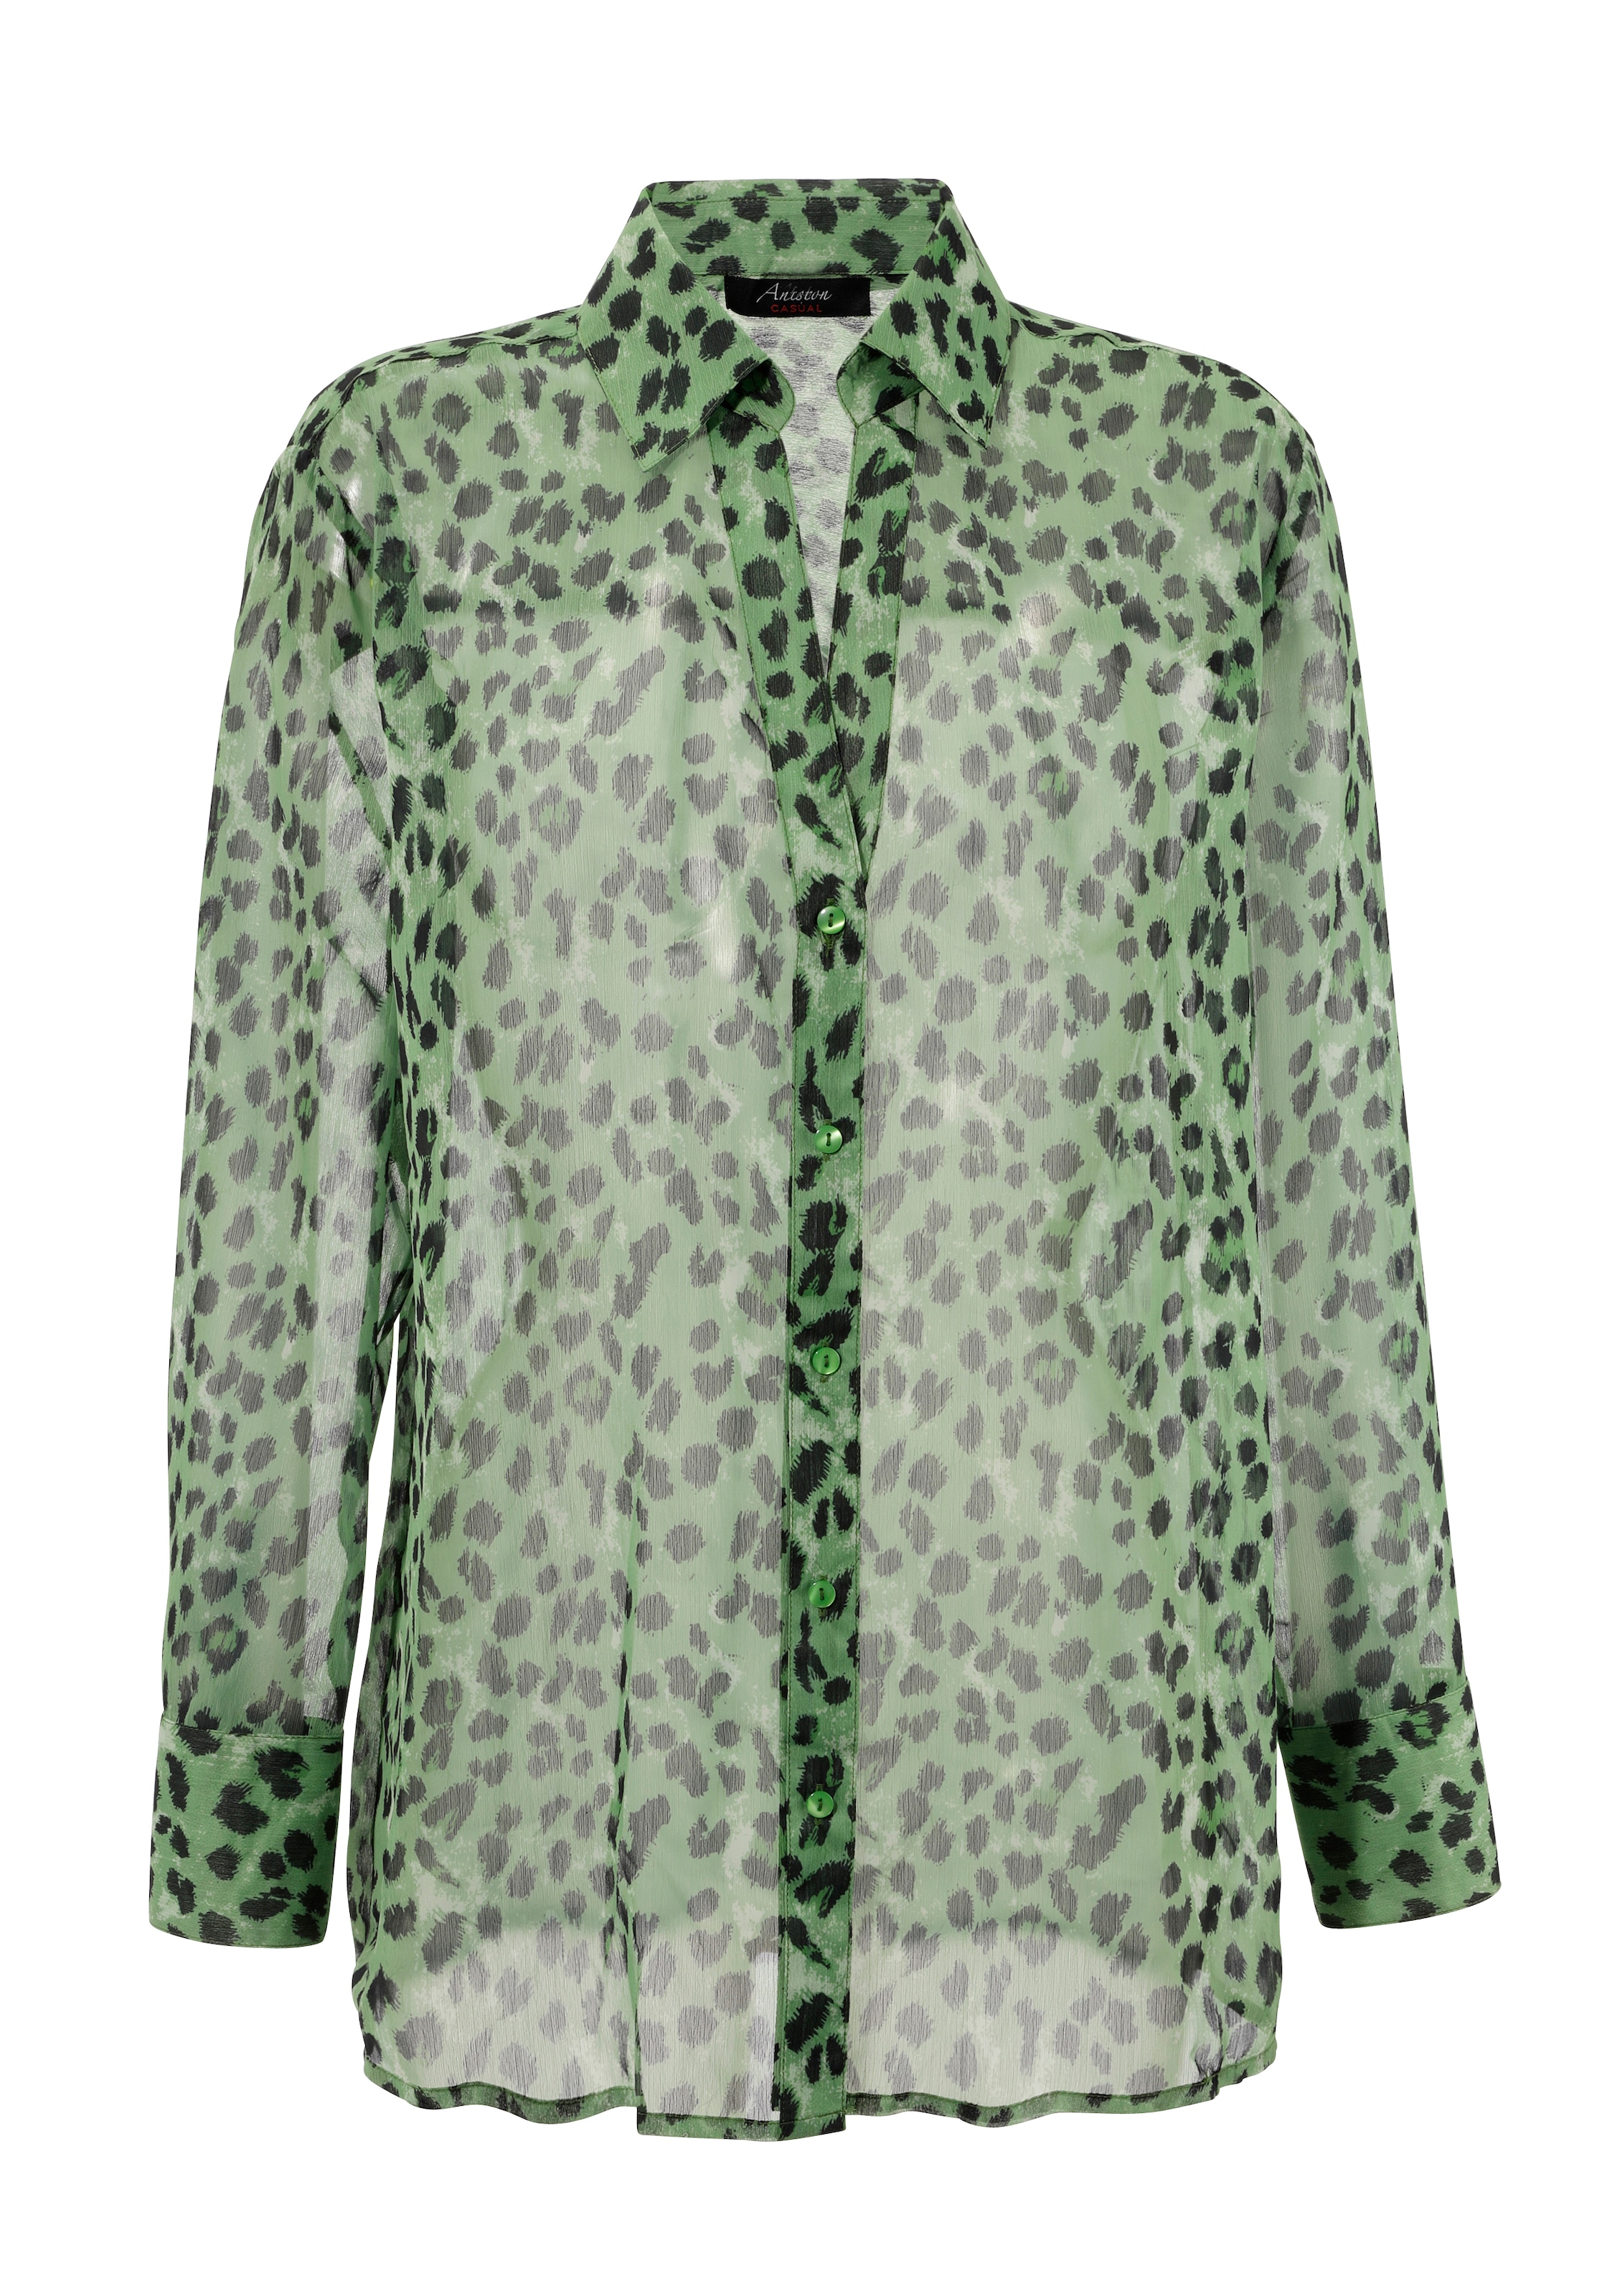 Aniston CASUAL Hemdbluse, mit Animal-Print KOLLEKTION - trendfarbenem NEUE online kaufen